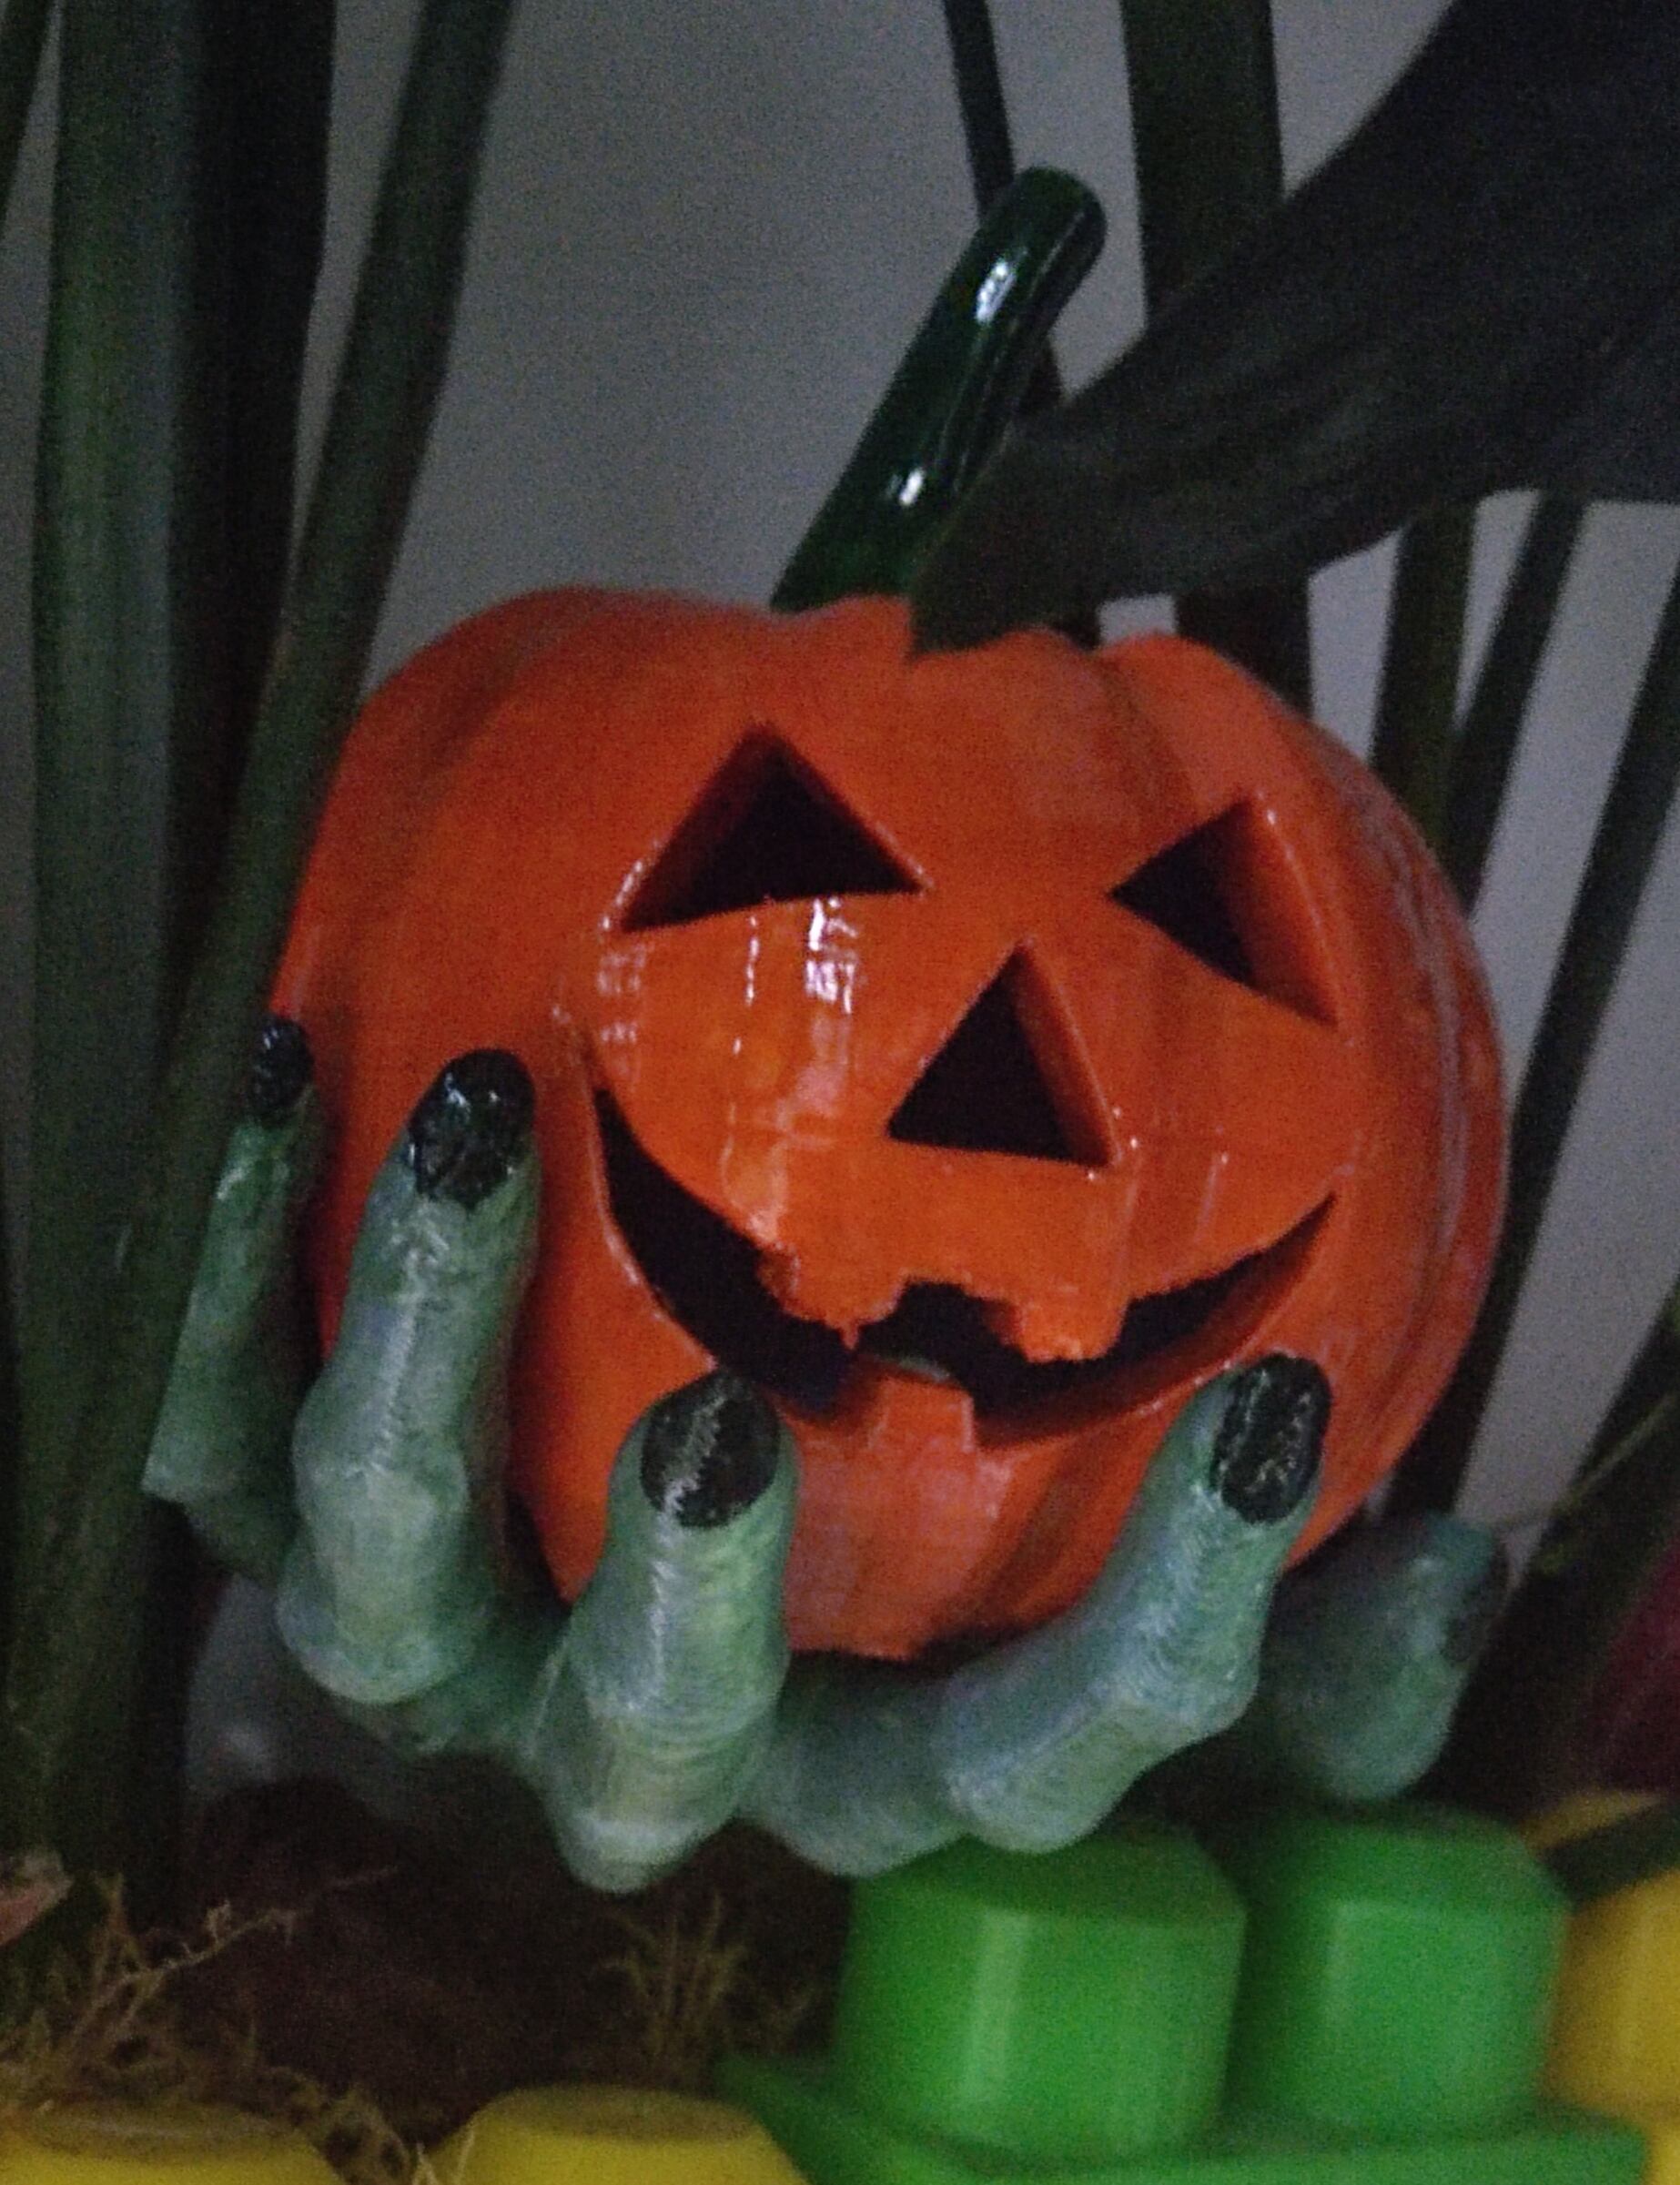 A pumpkin in a Zombie hand